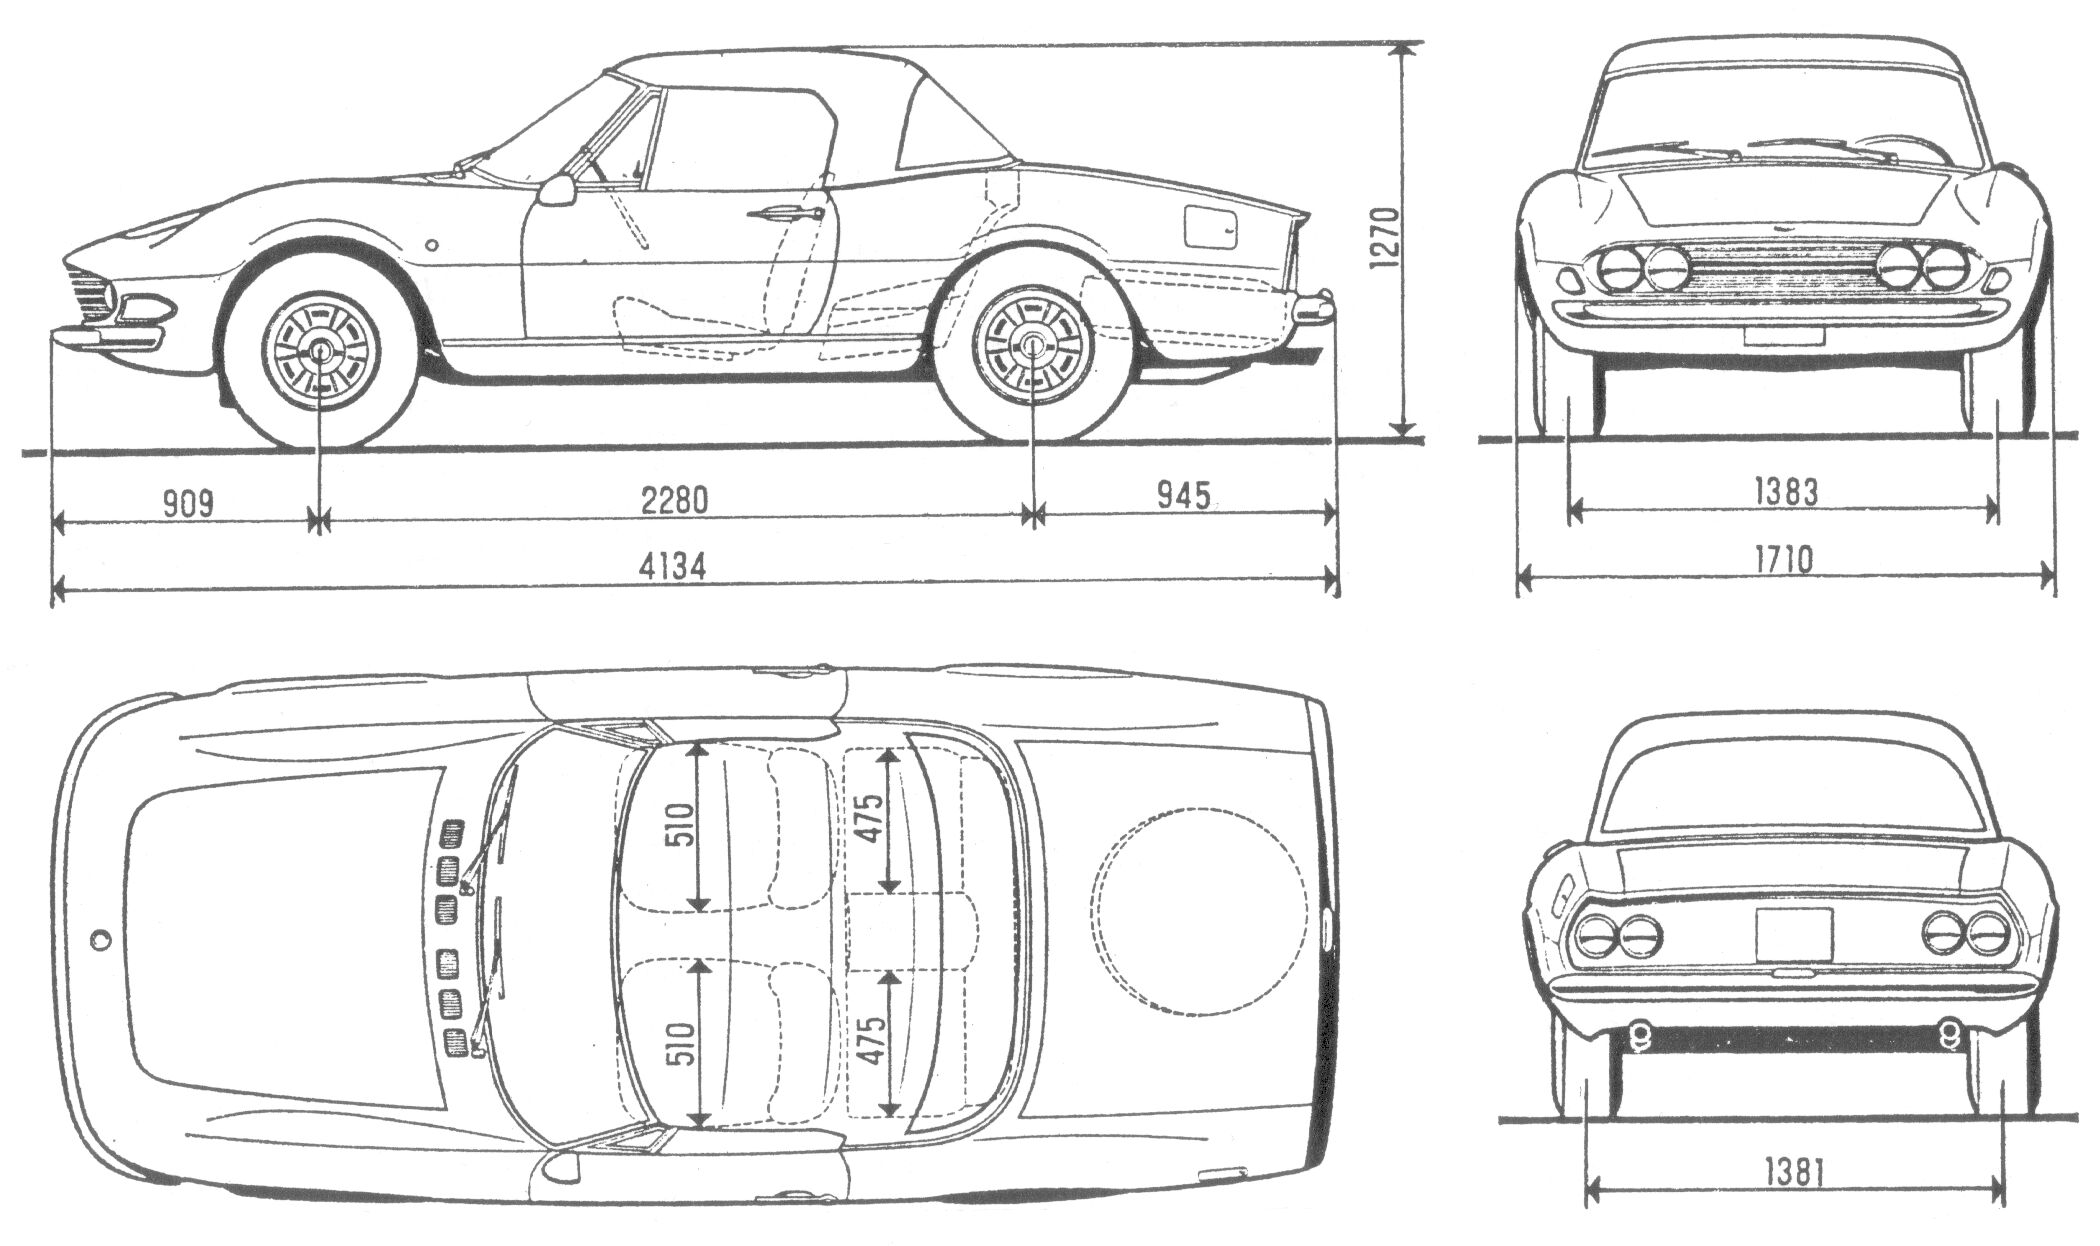 Fiat Dino 2400 blueprint